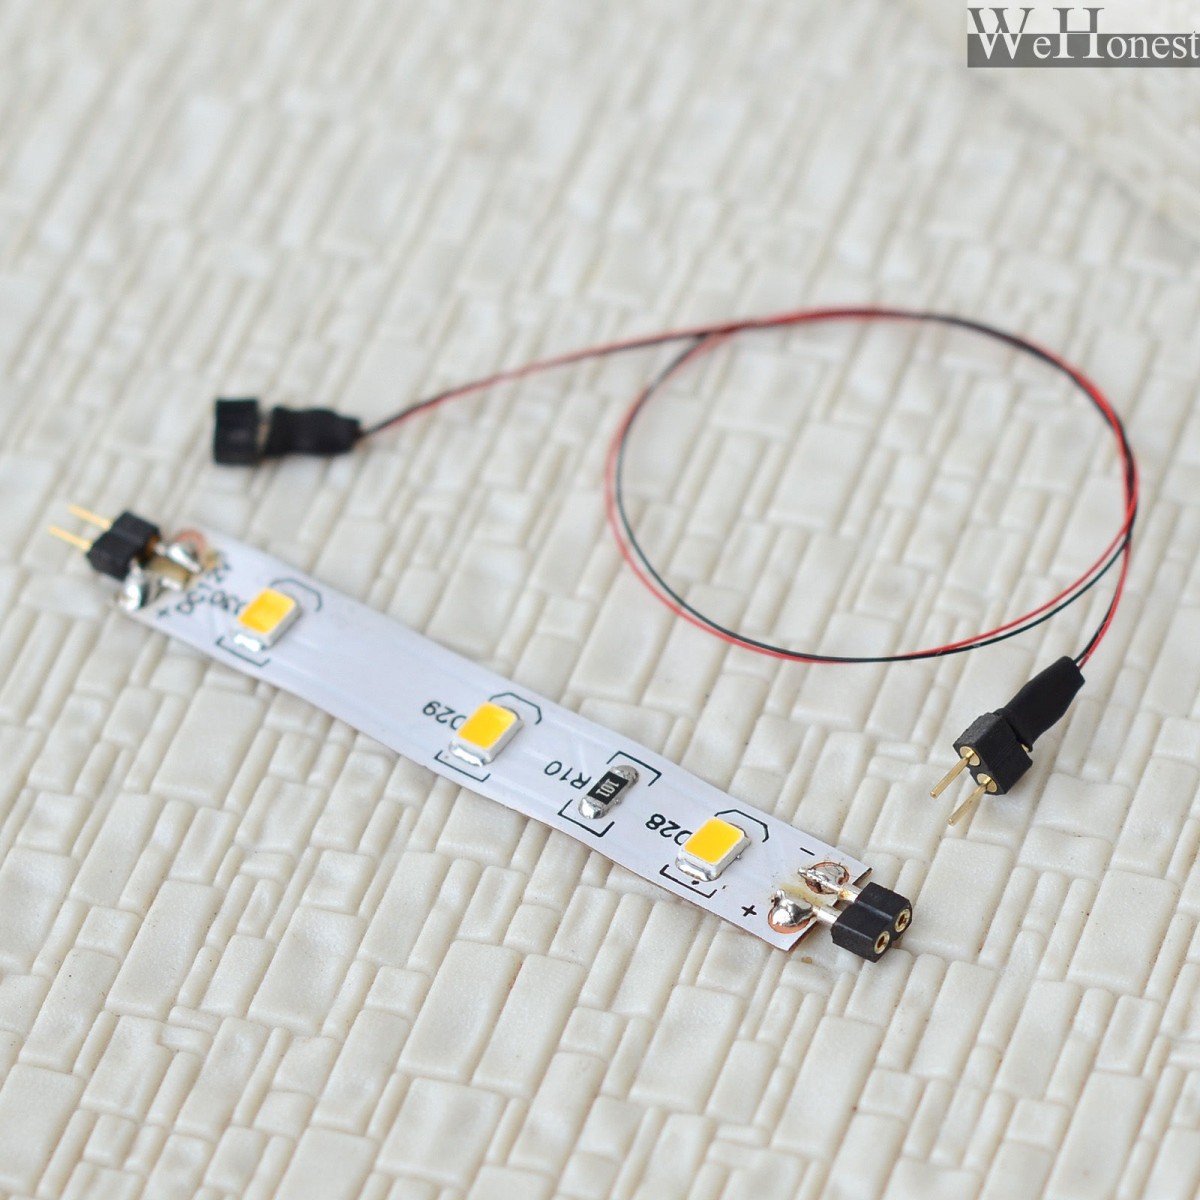 2 x LED lighting soft strips + Extension Kit connector for passenger car lights